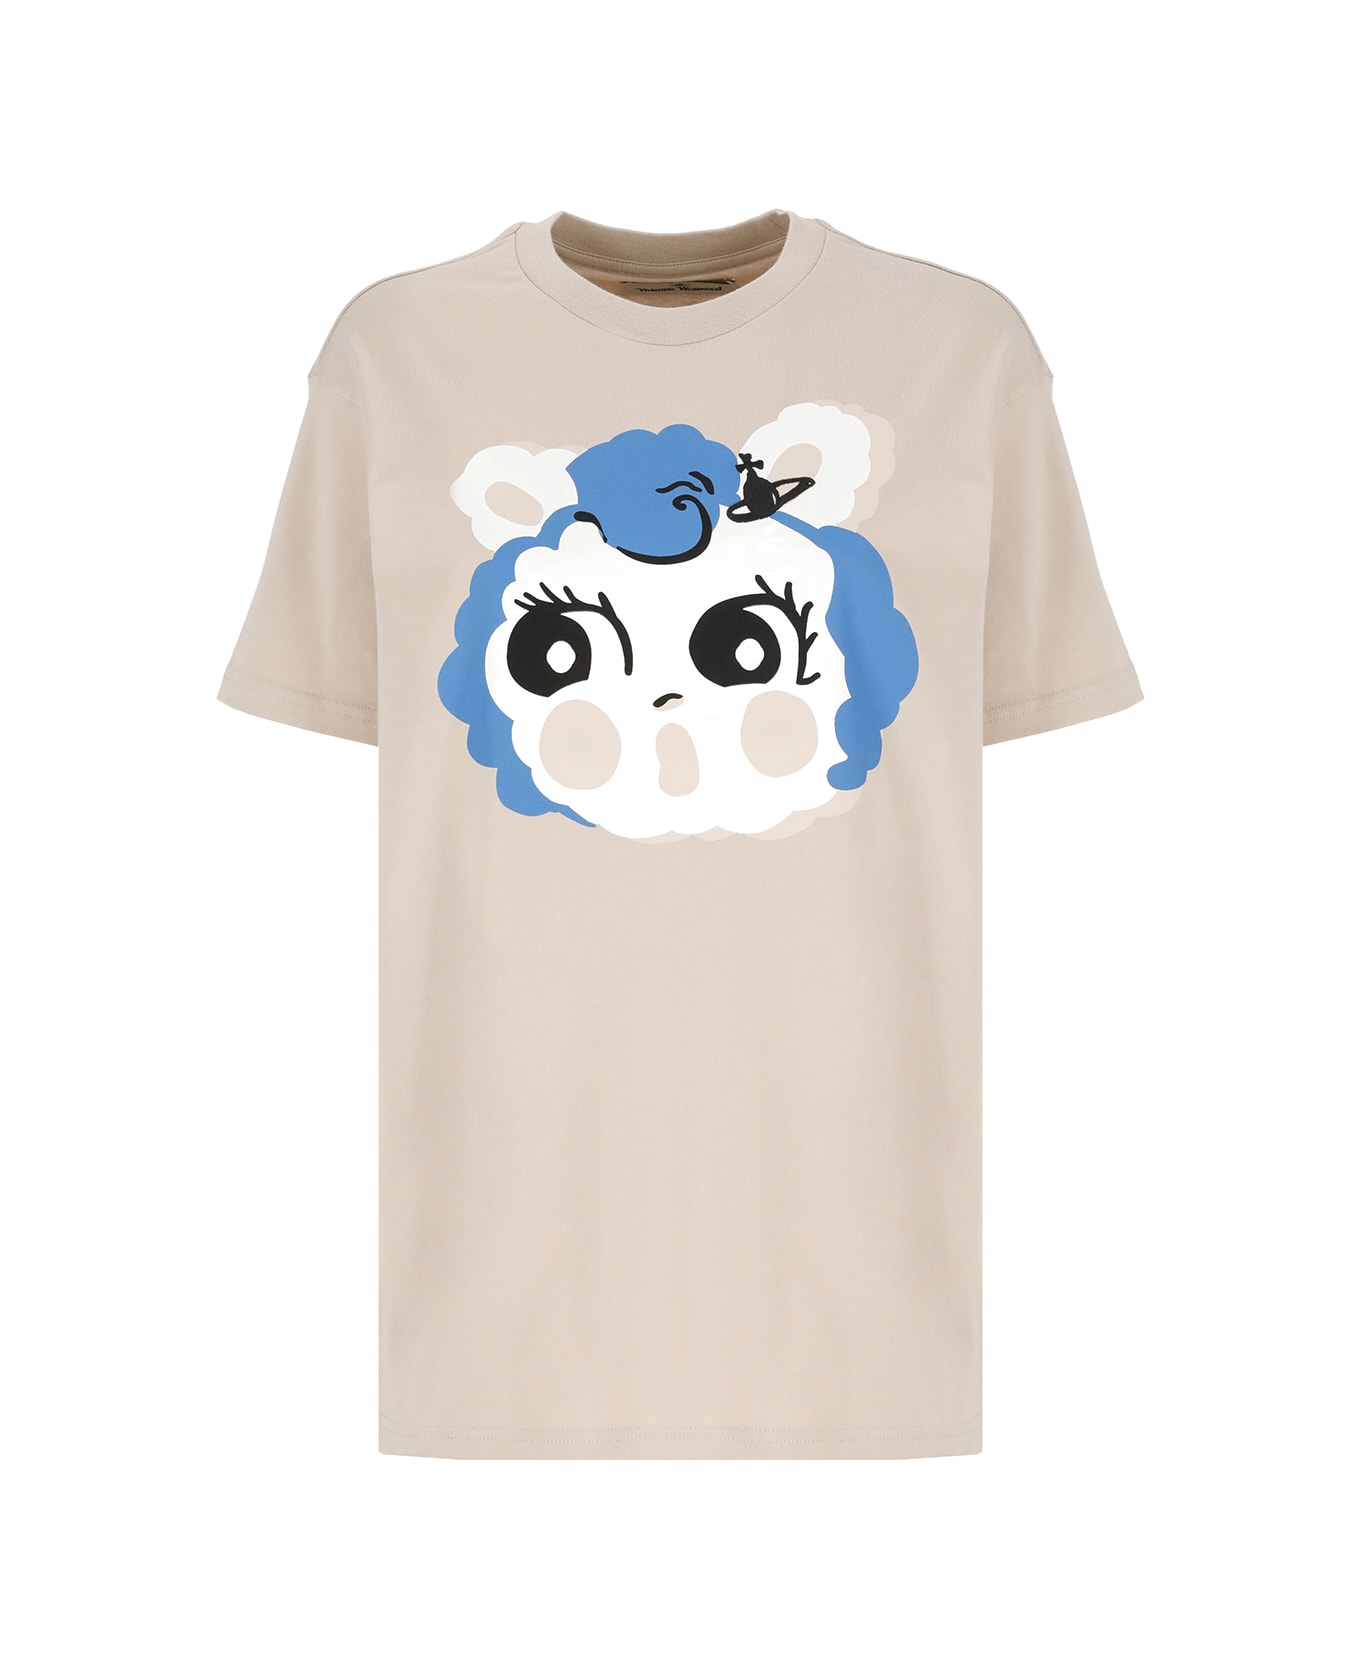 Vivienne Westwood Molly Classic T-shirt - Beige